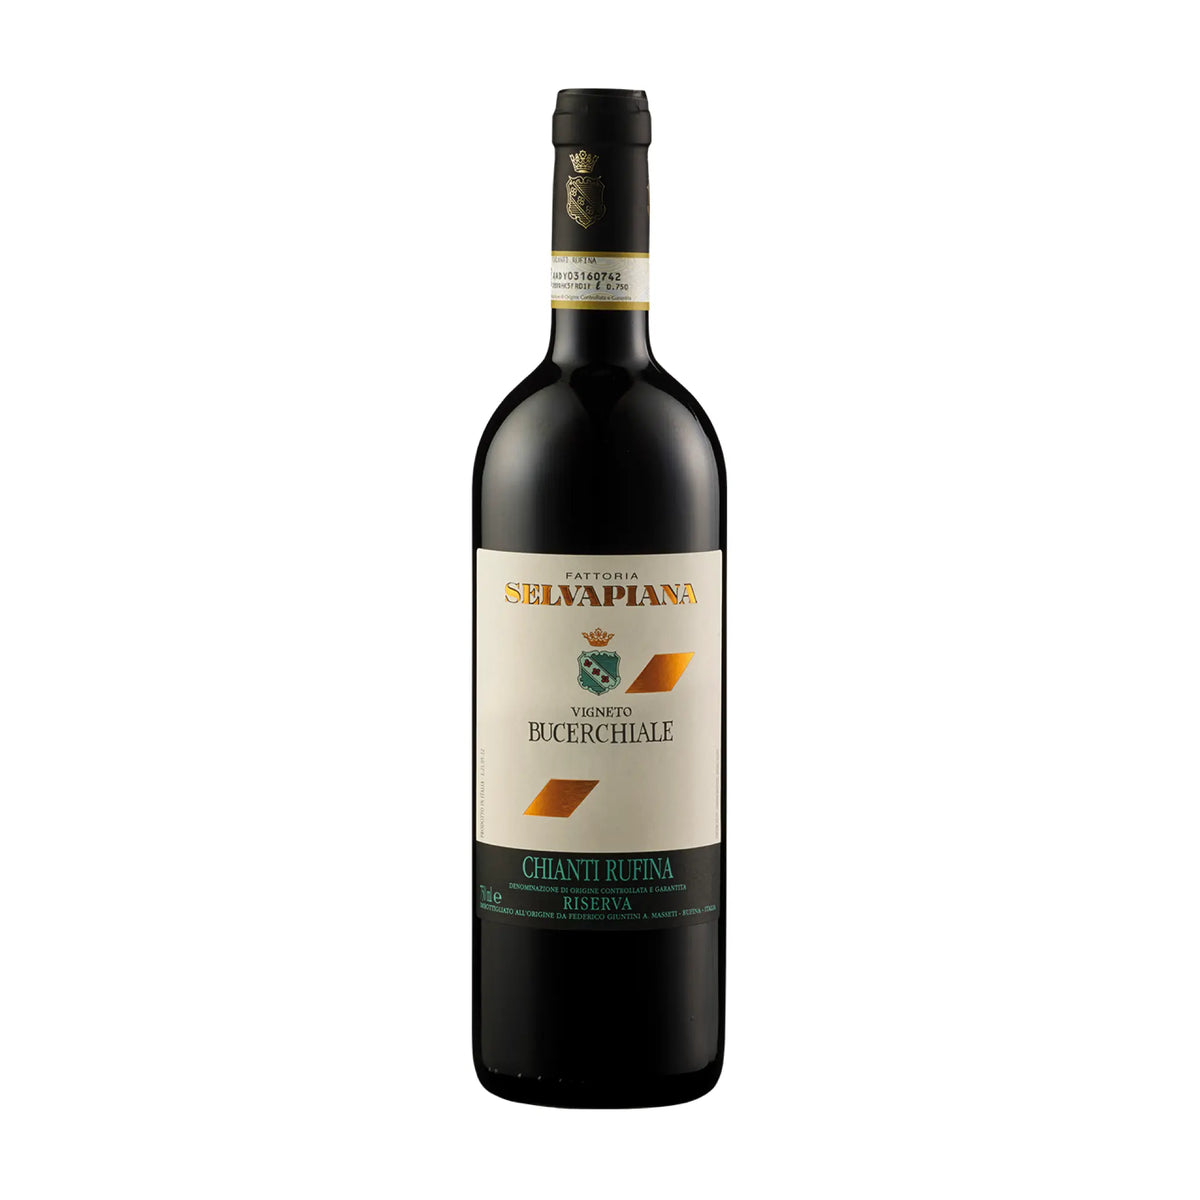 Selvapiana-Rotwein-Sangiovese-Italien-Toskana-2020 Chianti Rufina 'Bucerchiale' Riserva DOCG-WINECOM